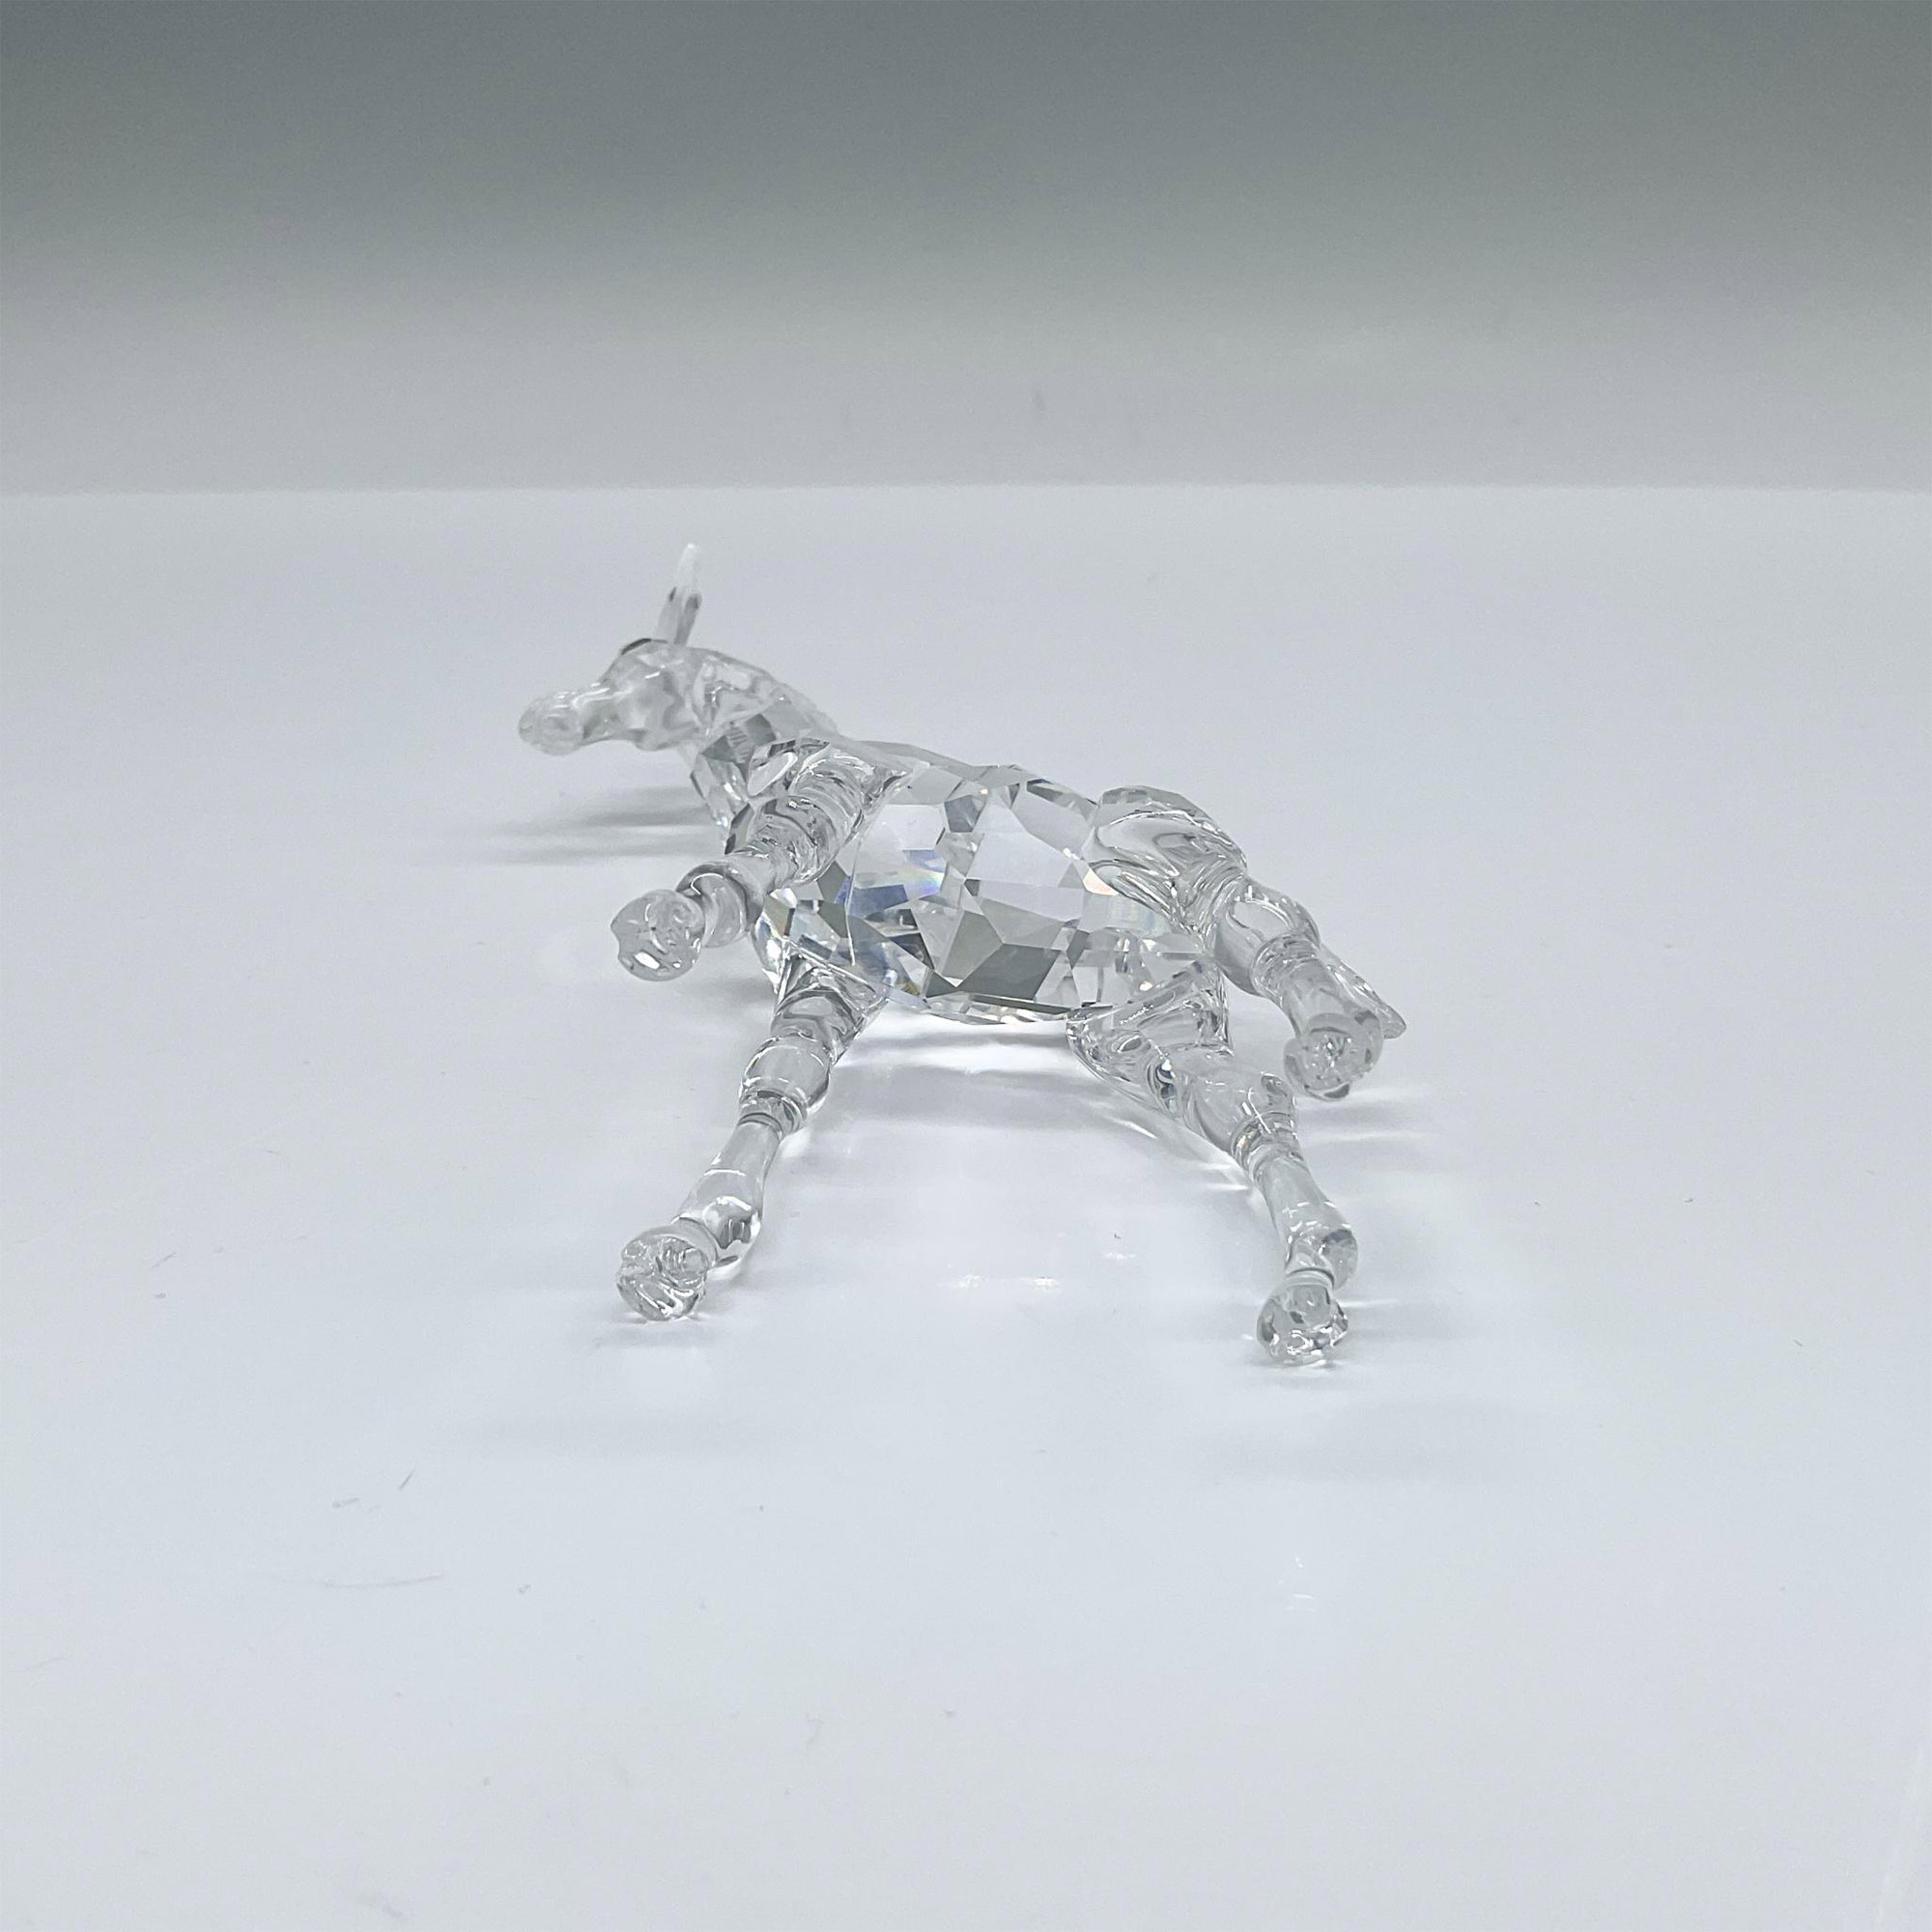 Swarovski Crystal Figurine, Baby Giraffe - Image 3 of 4